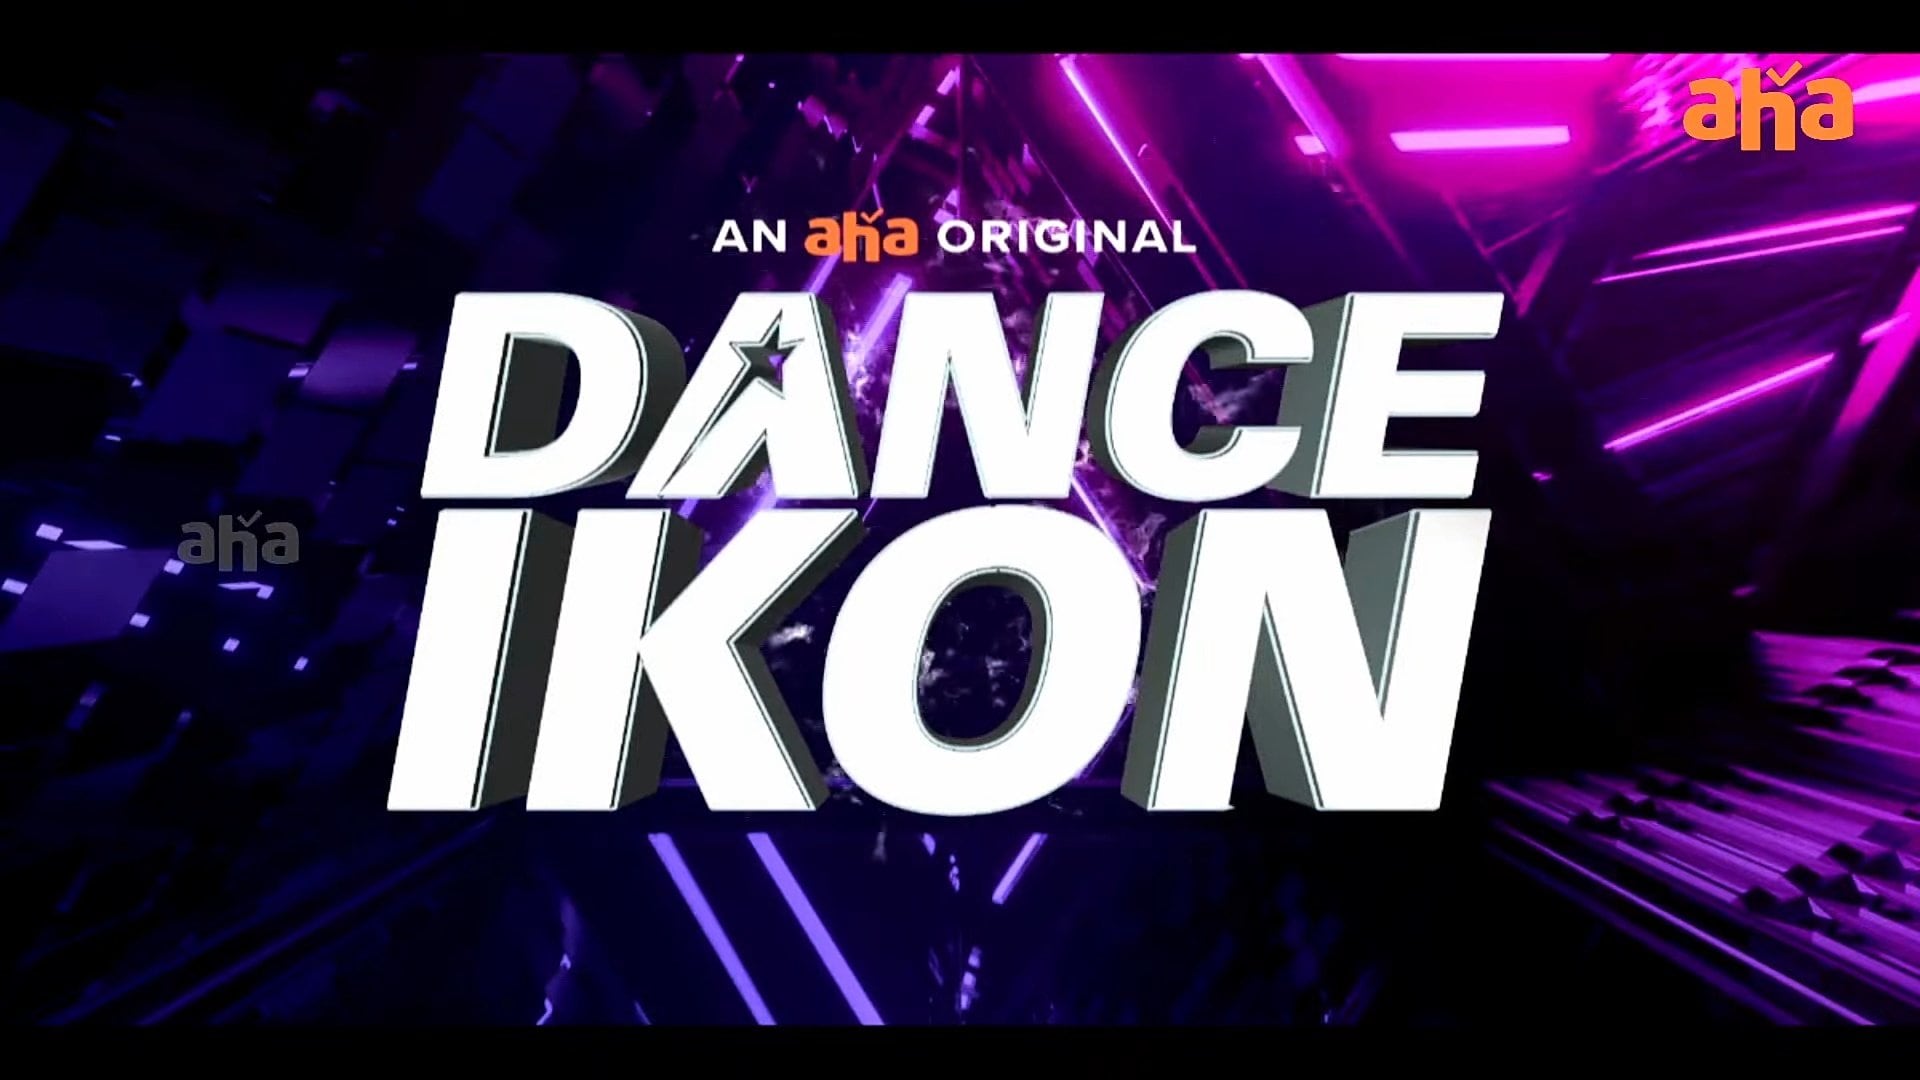 Dance ikon on aha